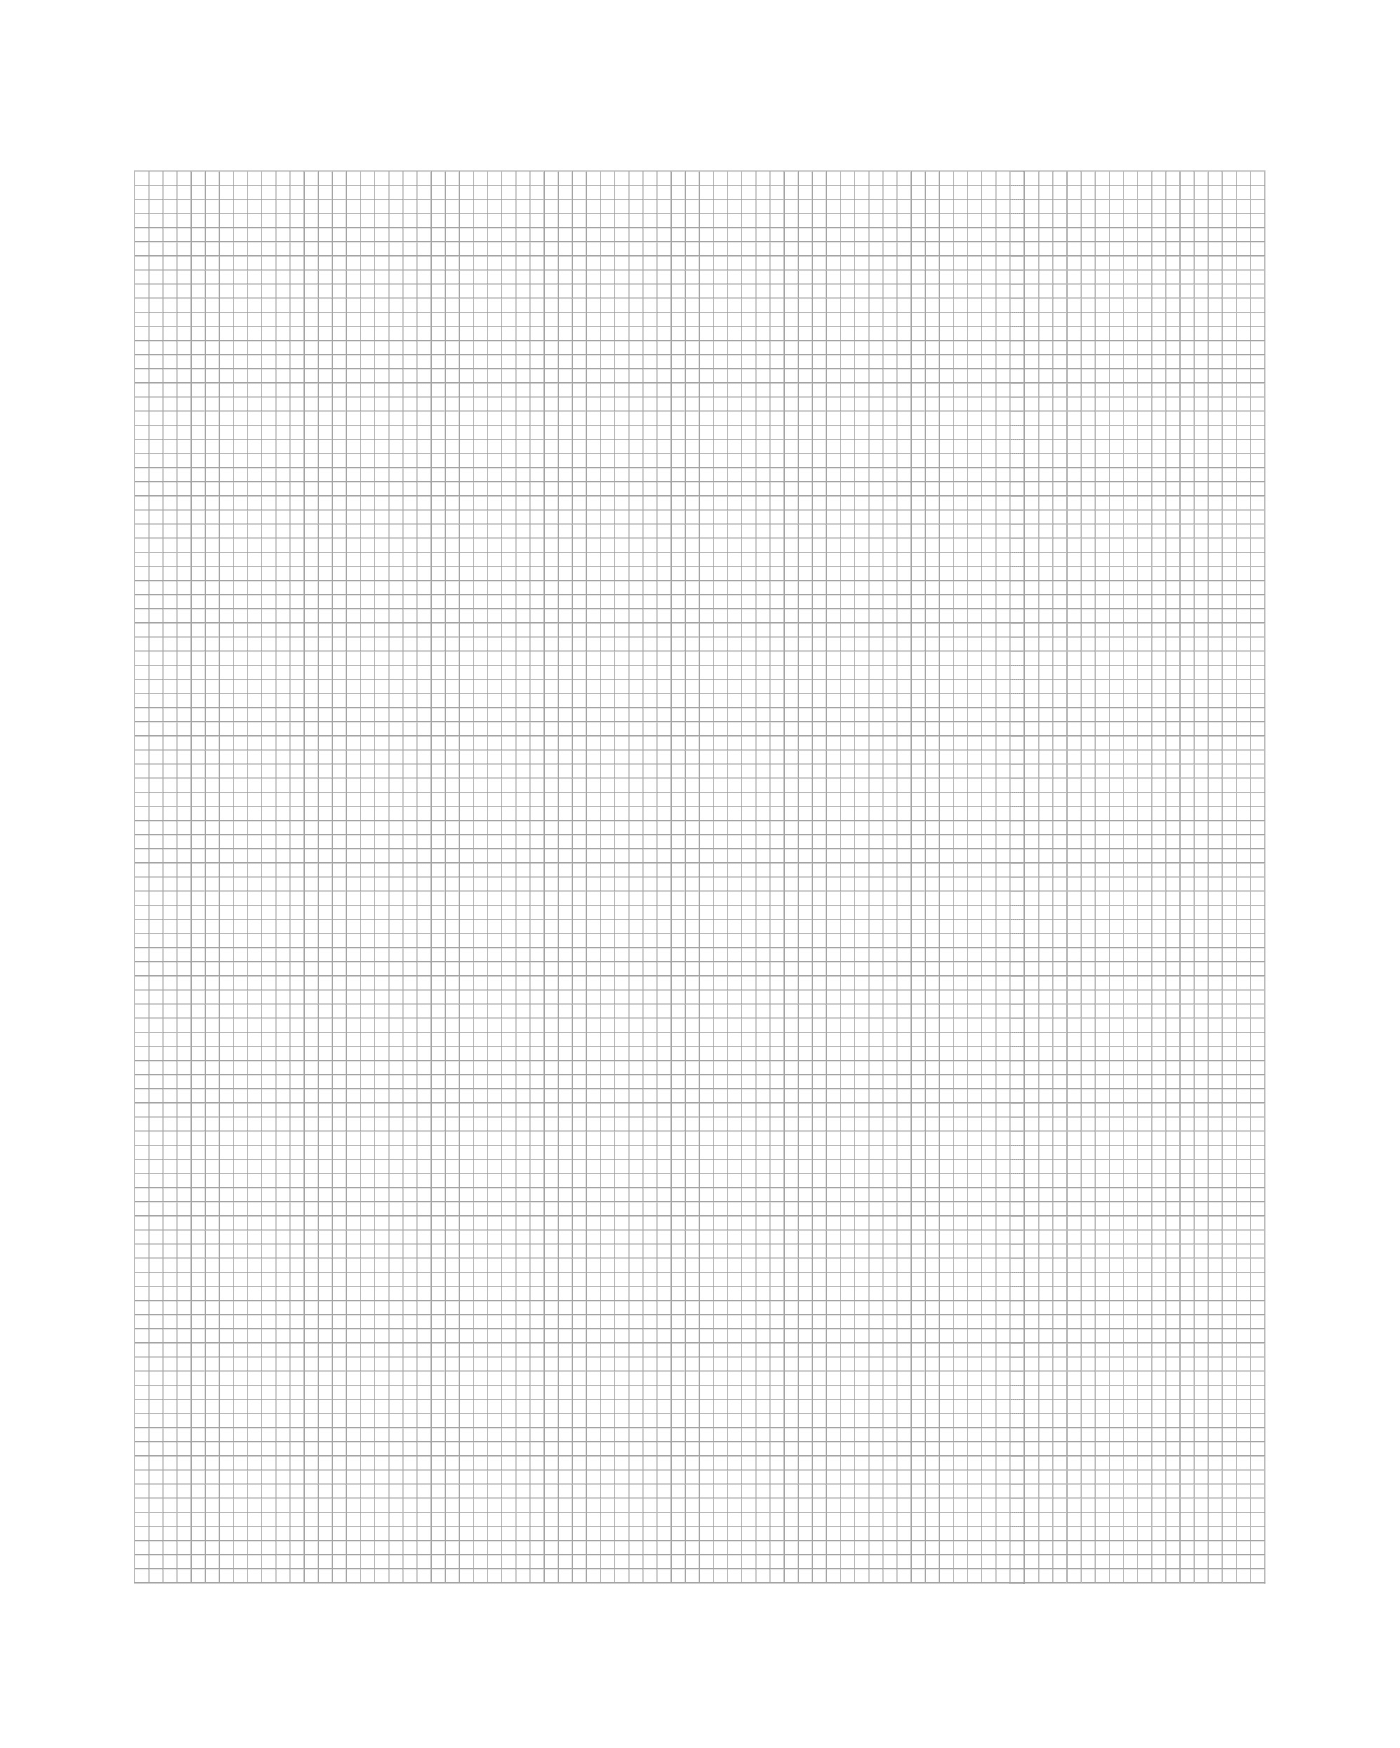  A blank pixel grid to print 